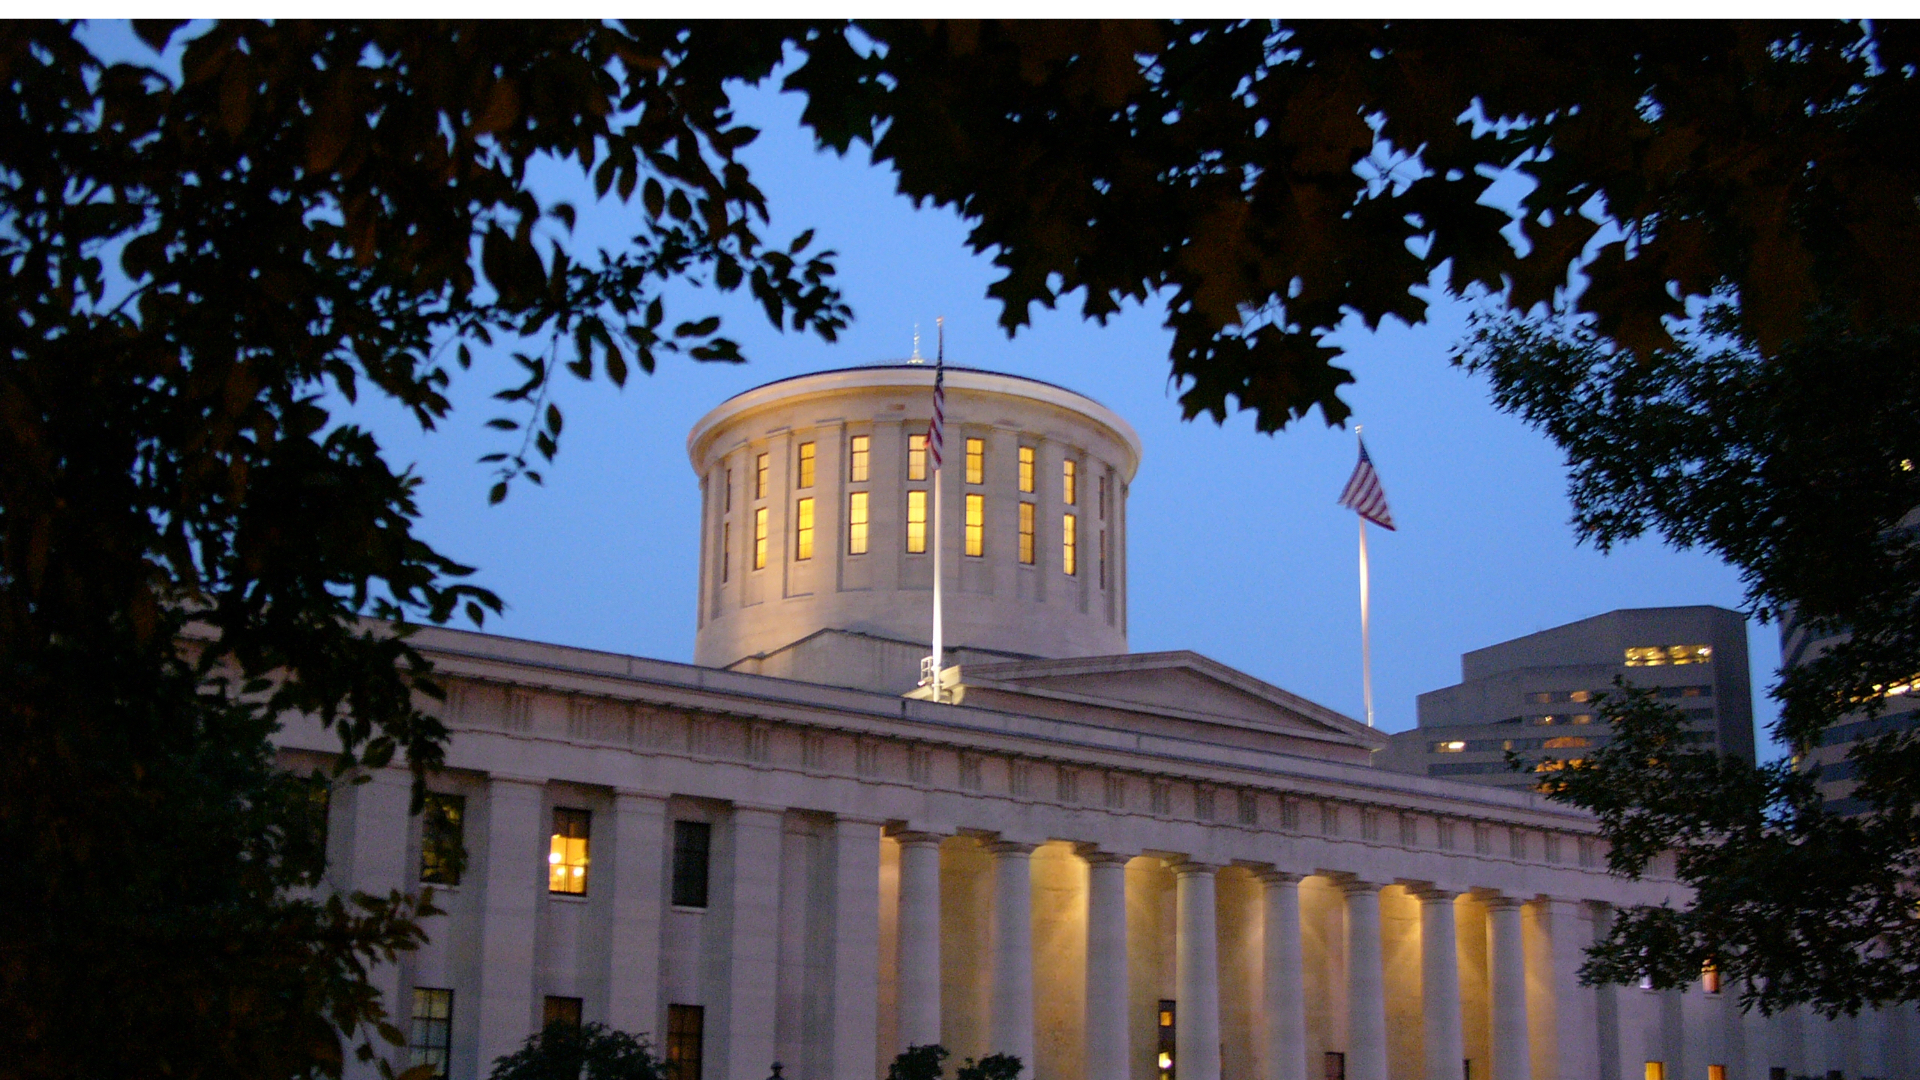 Ohio State Capital